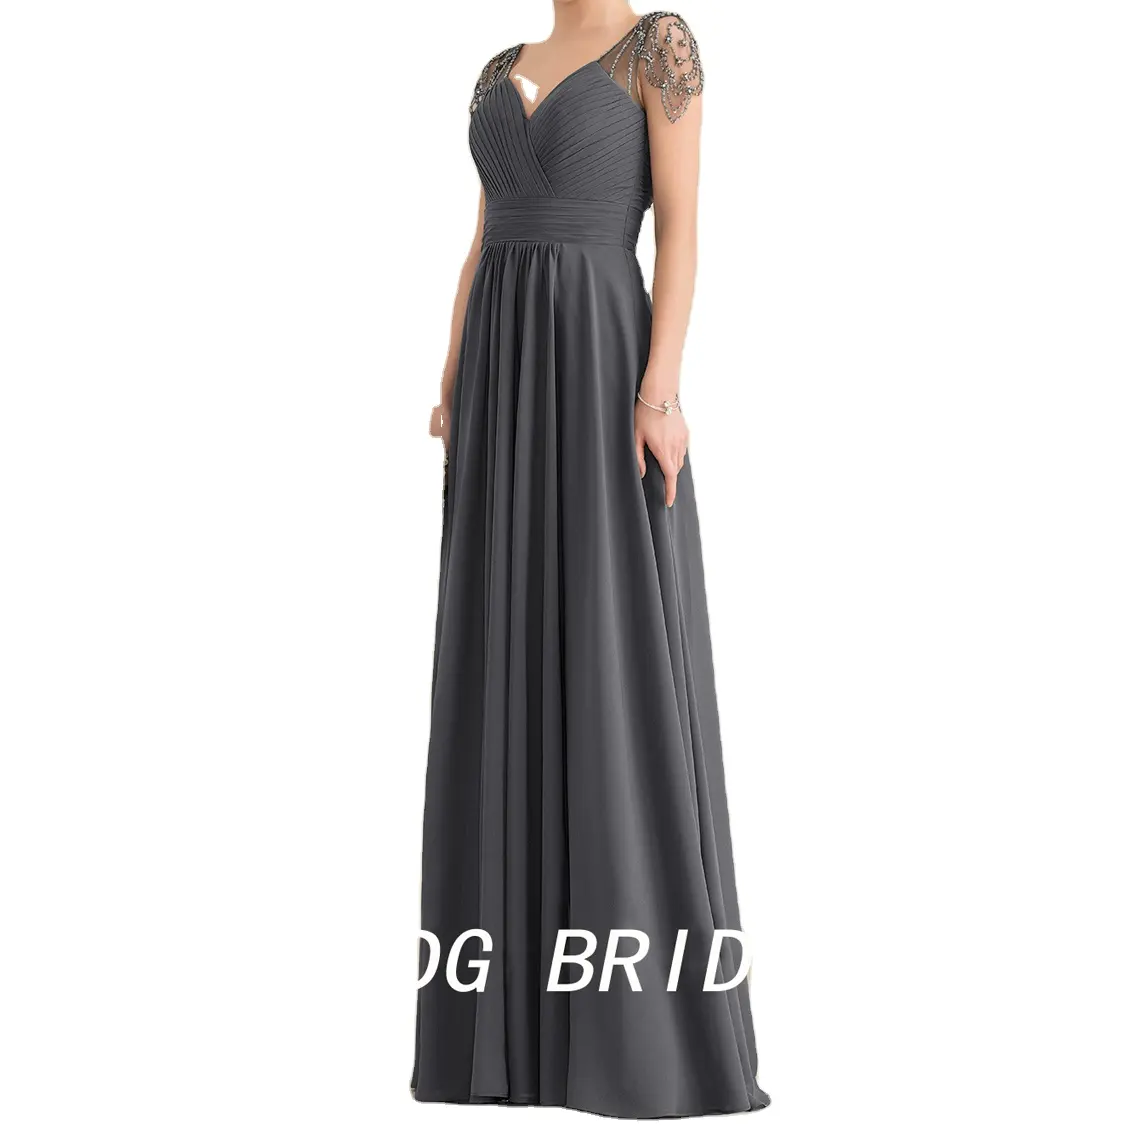 Kdg Bridal Backless Custom Made Any Color Gray Pleated Dress Black Chiffon Satin Beaded Tulle Weddings Bridesmaid Dresses Long